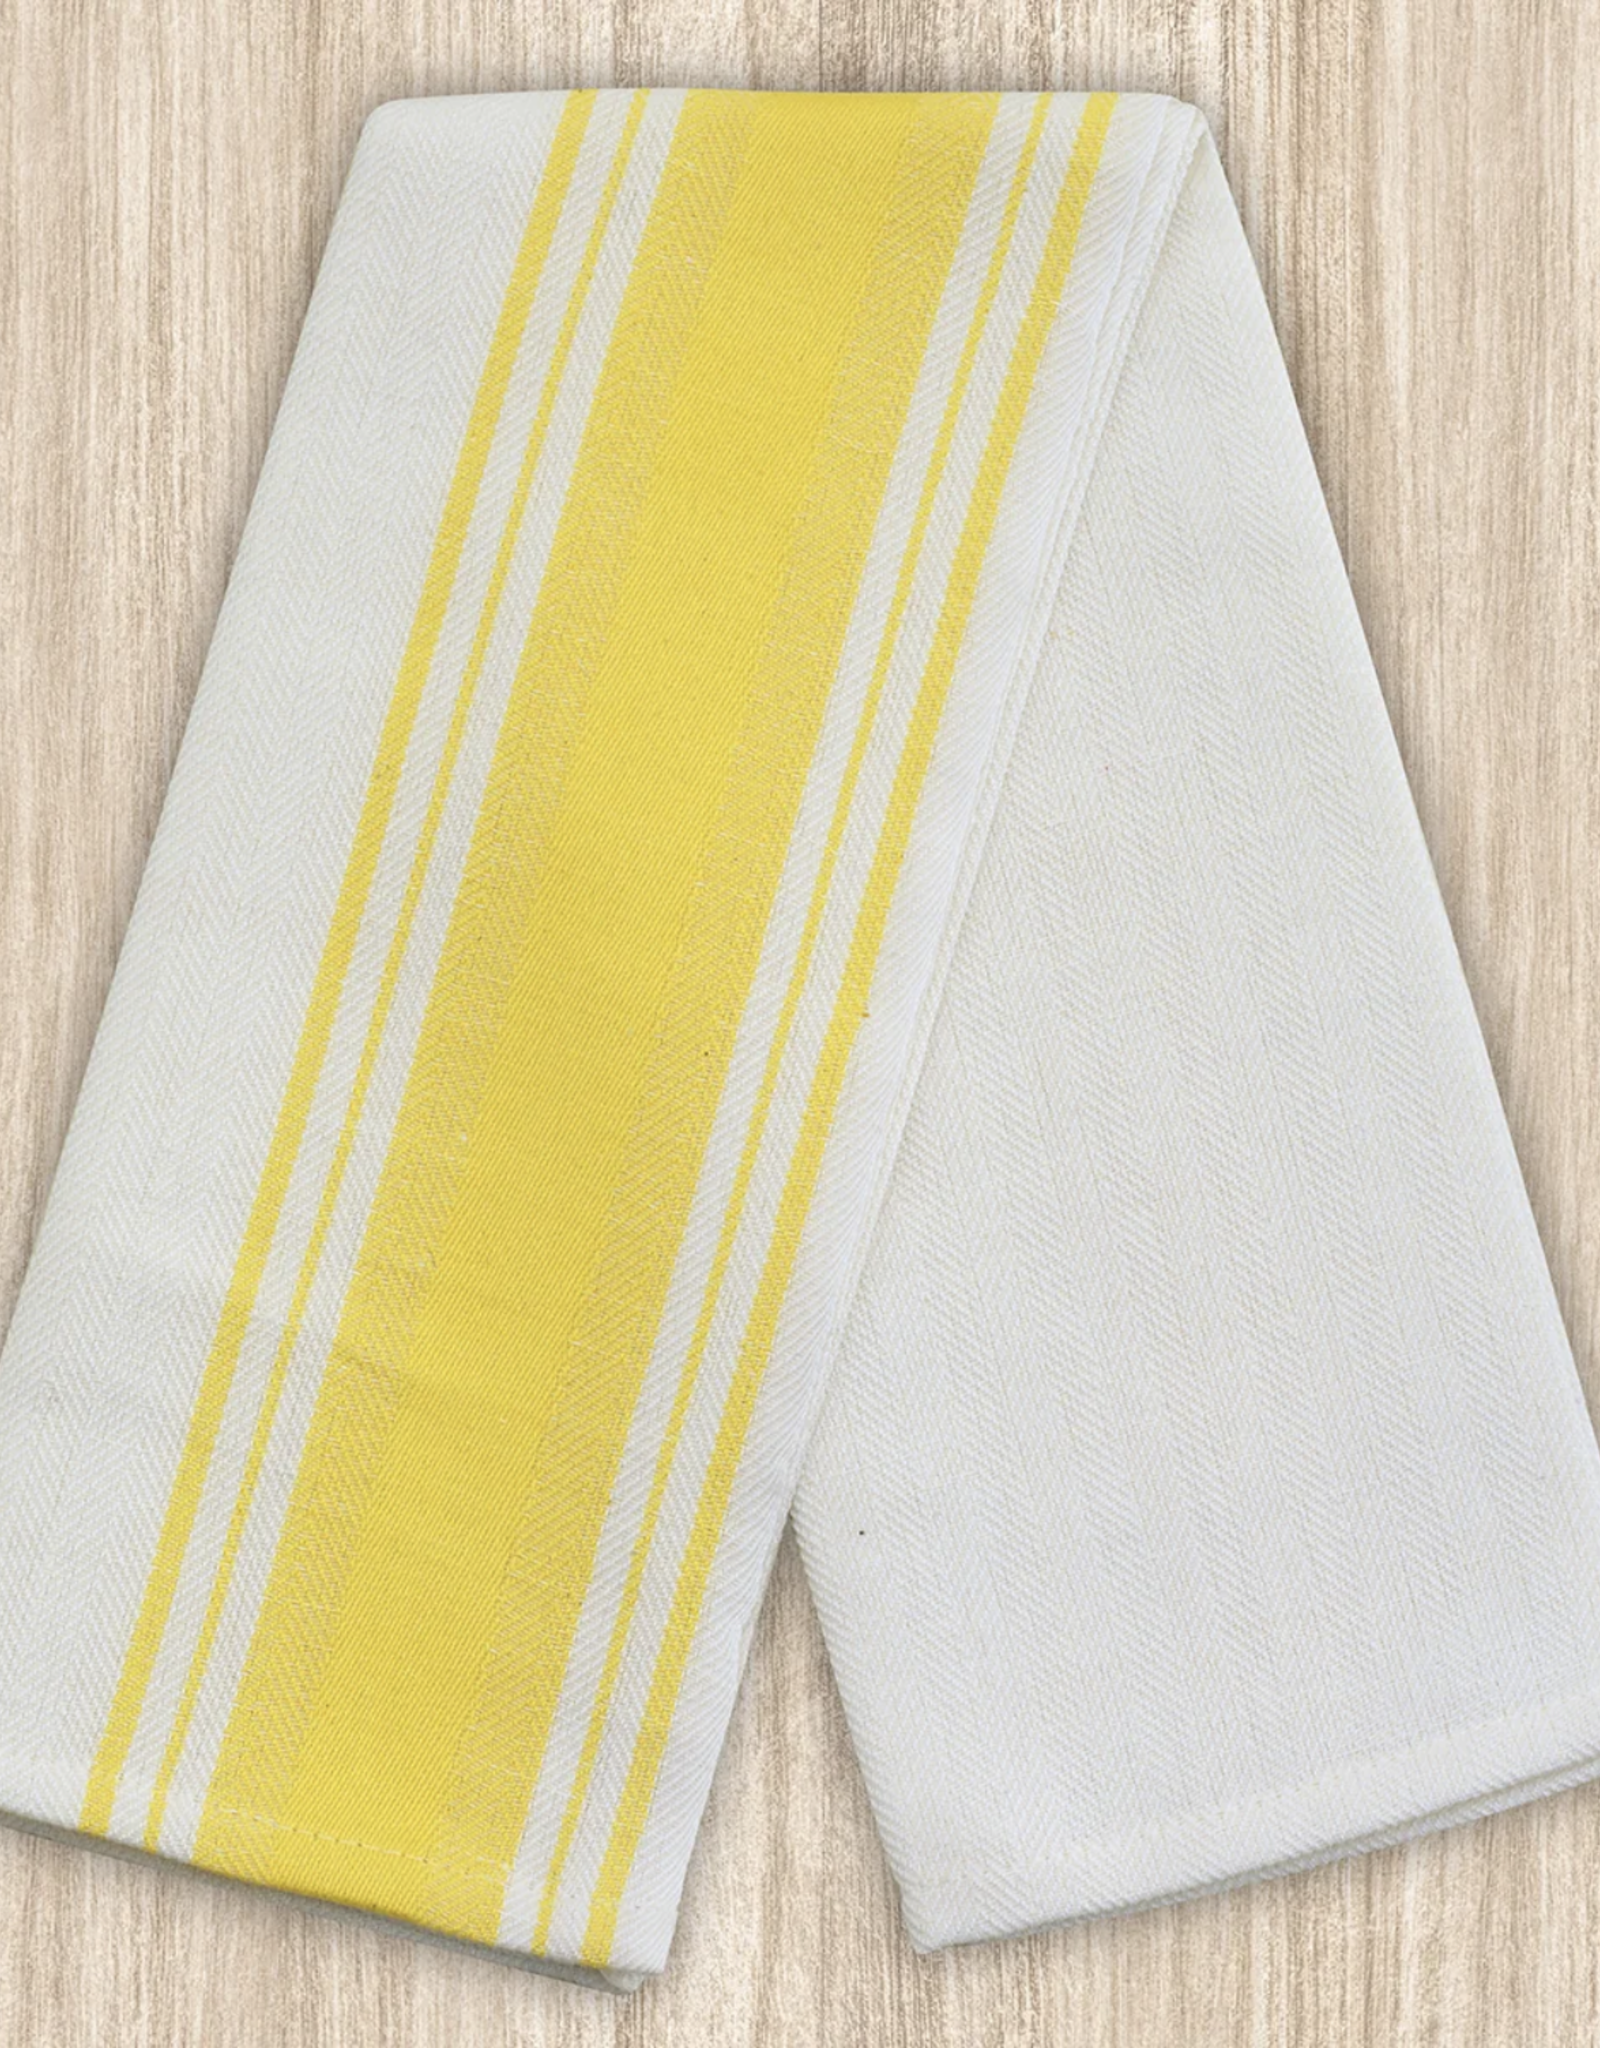 Busatti Italy Busatti Due Fragole - Kitchen towel  (Color - Bright Yellow) 60% Linen 40% Cotton